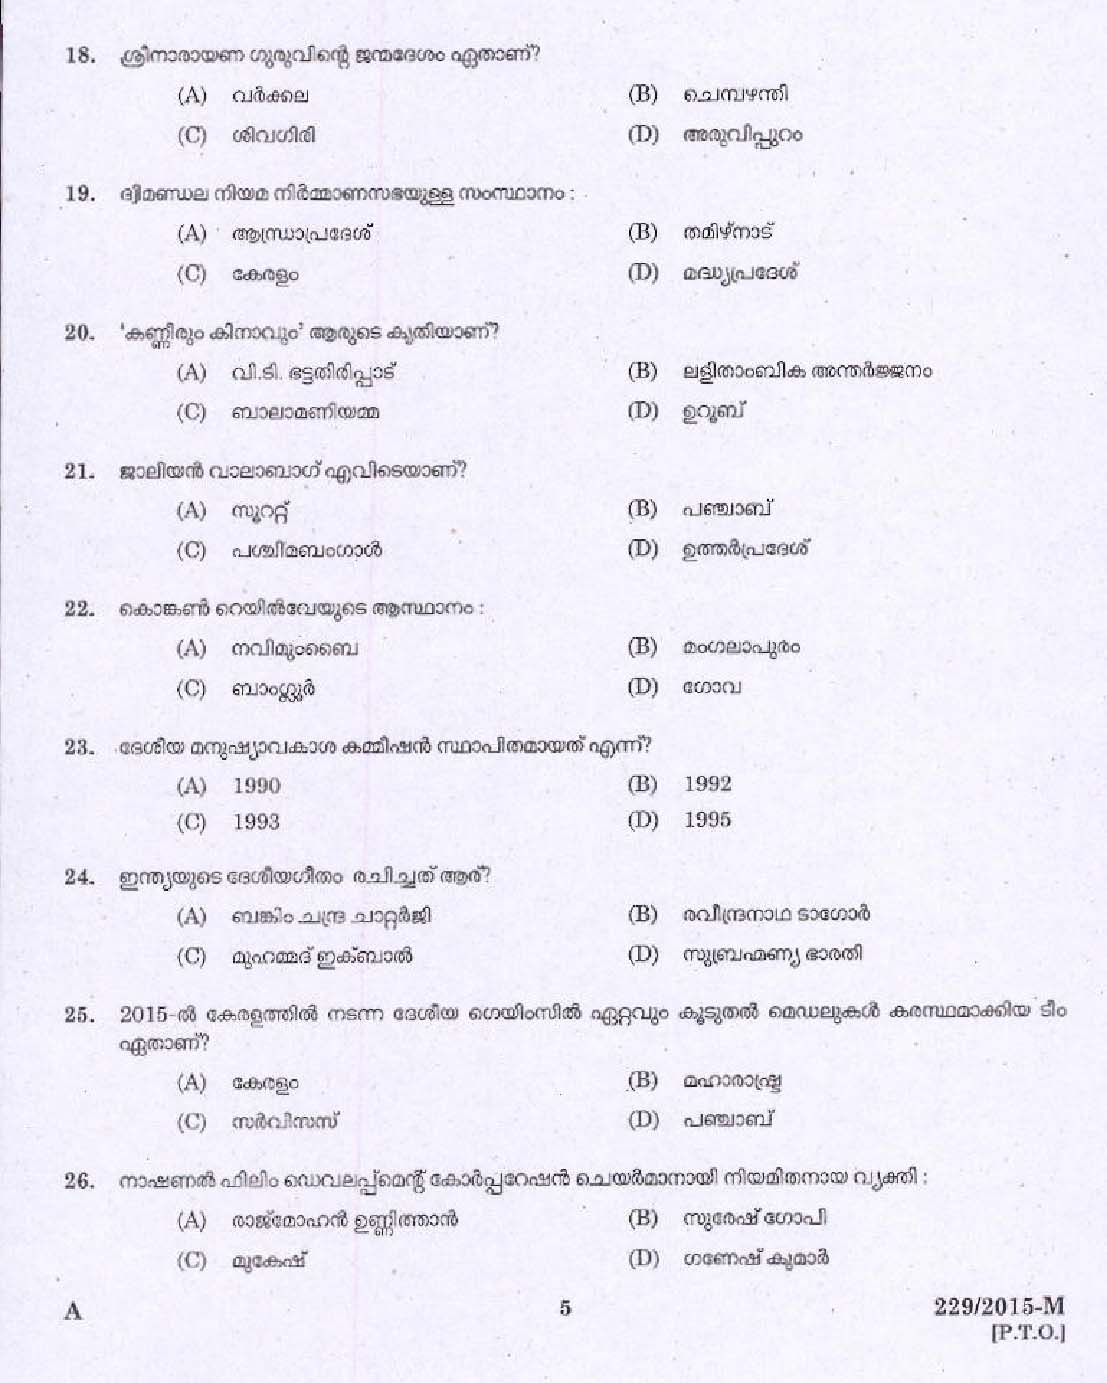 Kerala PSC Seaman Exam 2015 Question Paper Code 2292015 M 3